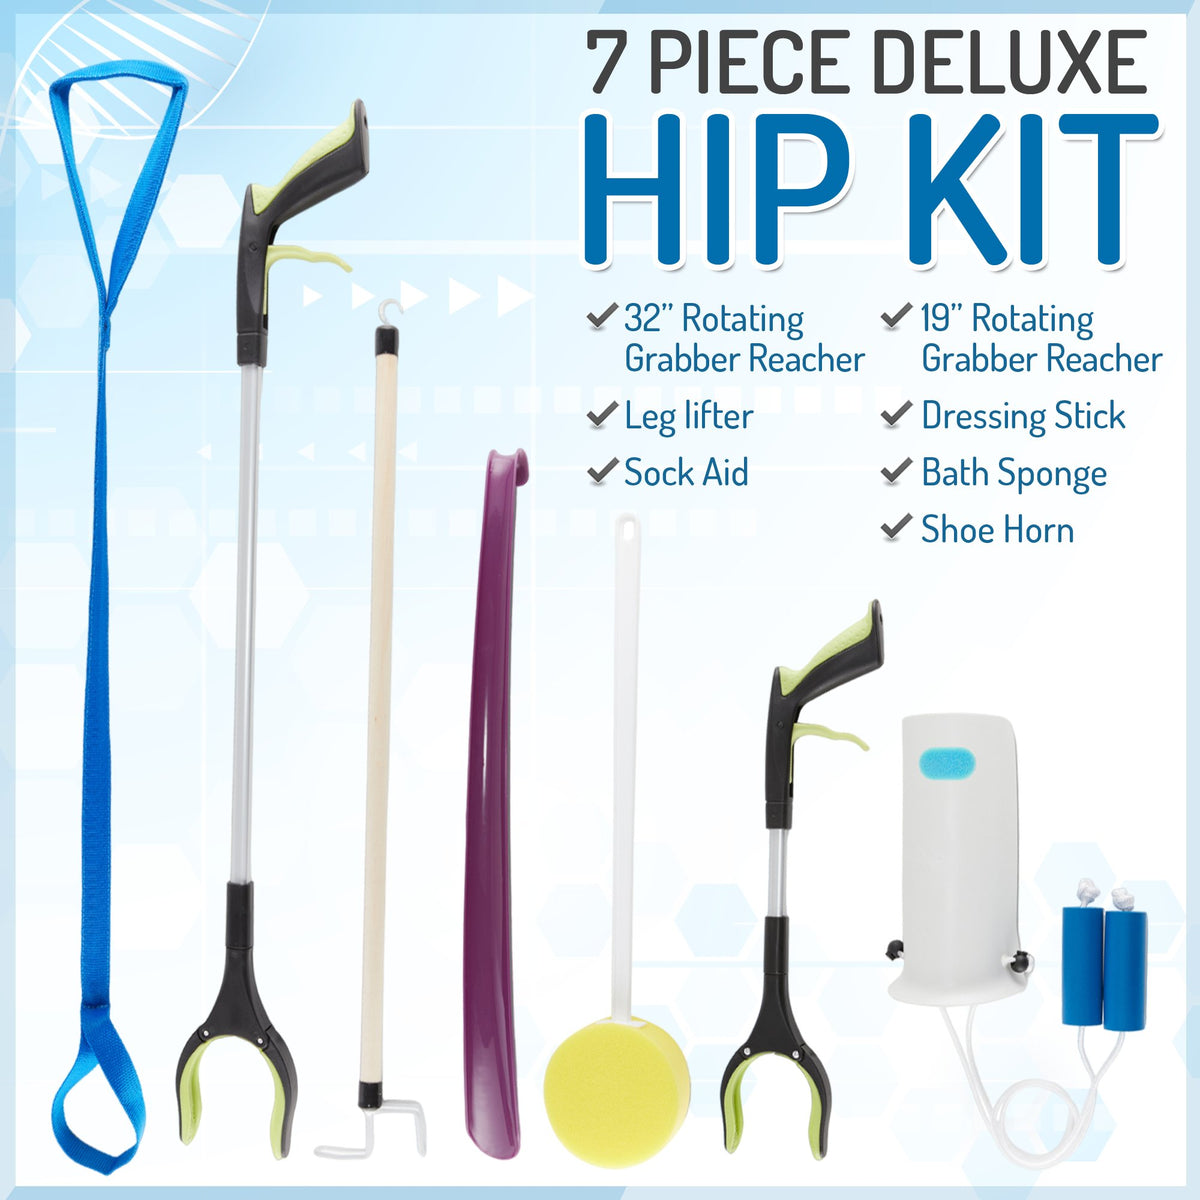 7 Piece Deluxe Hip Kit - Deluxe Hip/Knee Replacement Kit Tool - Leg Lifter, Sock Iad, 2 Rotating Grabber Reacher, Dressing Stick, Shoe Horn, Bath Sponge - Surgery Recovery Kit